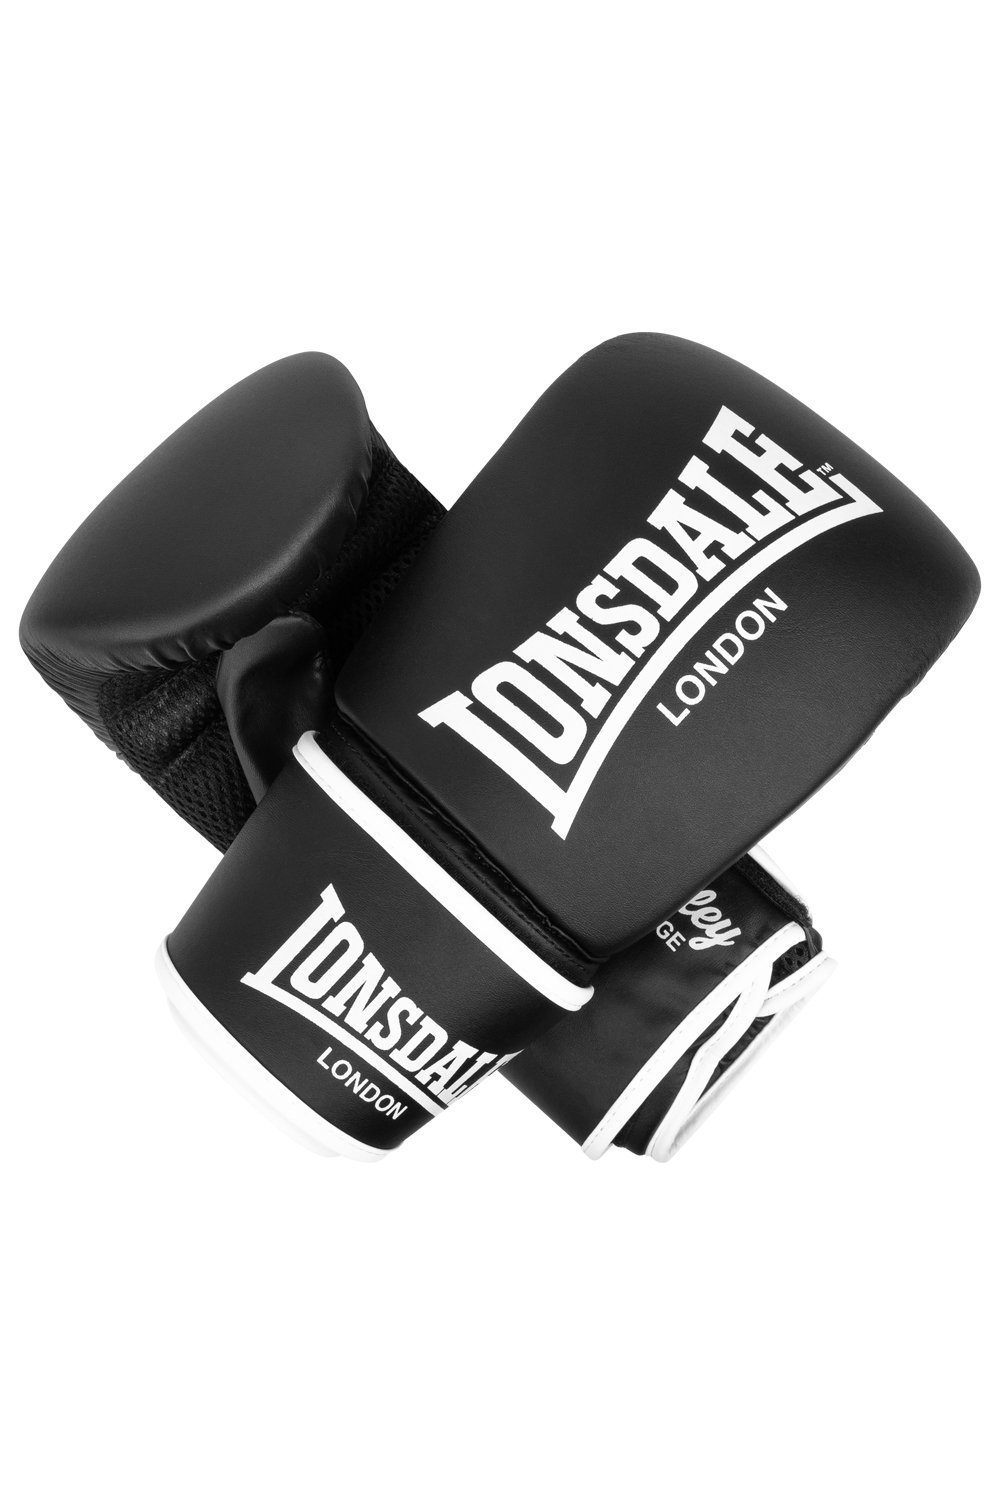 Black/White BARLEY Boxhandschuhe Lonsdale